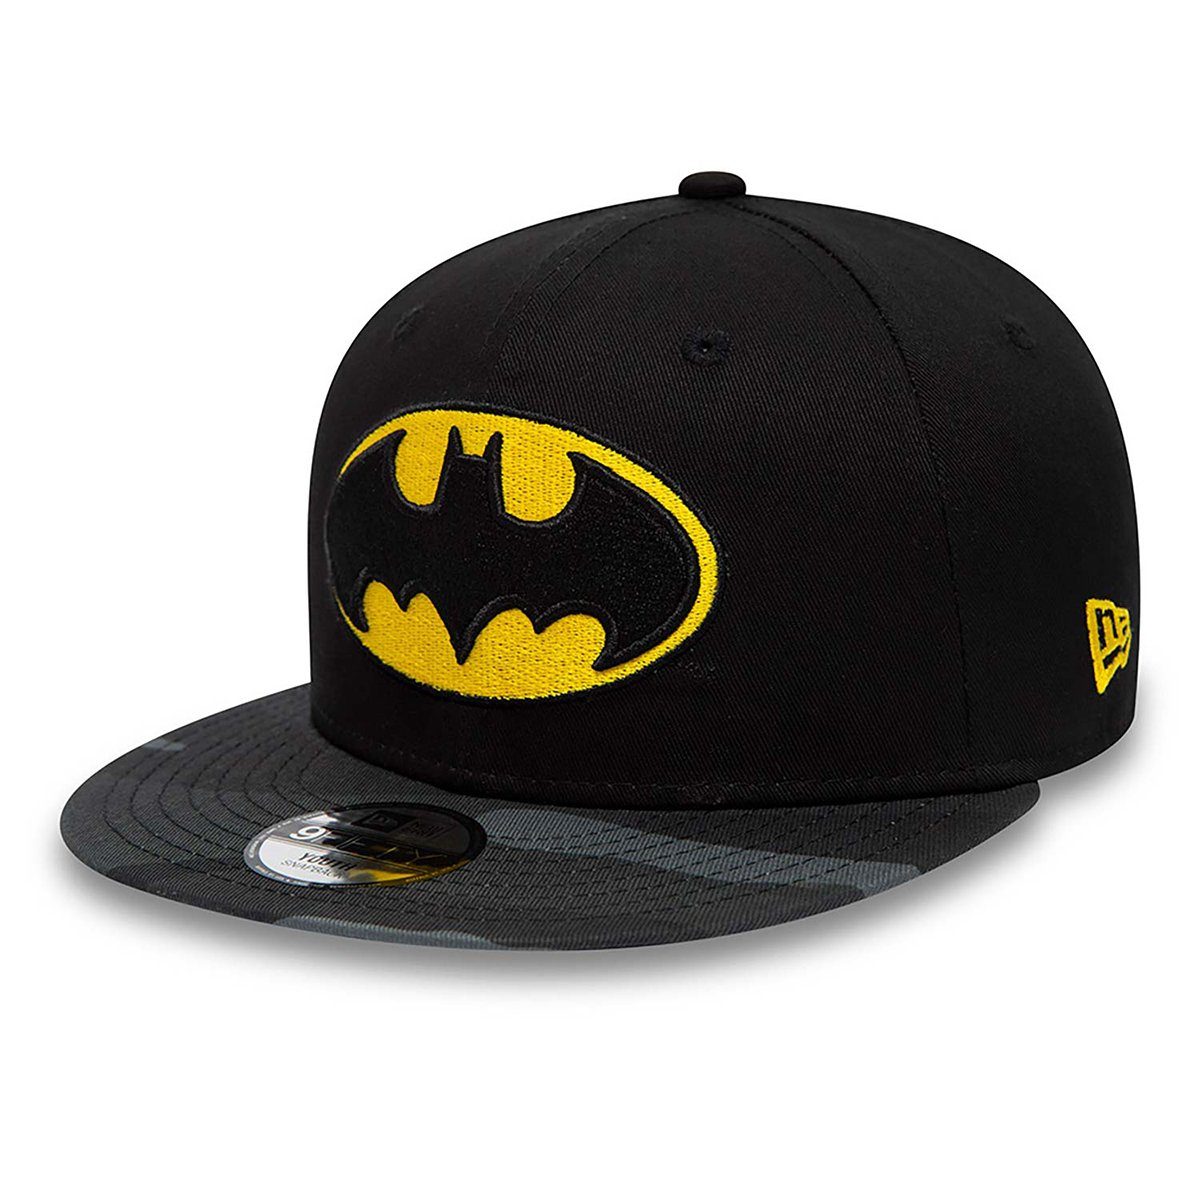 Era Character New Baseball Cap meliert Batman 9FIFTY schwarz Camo